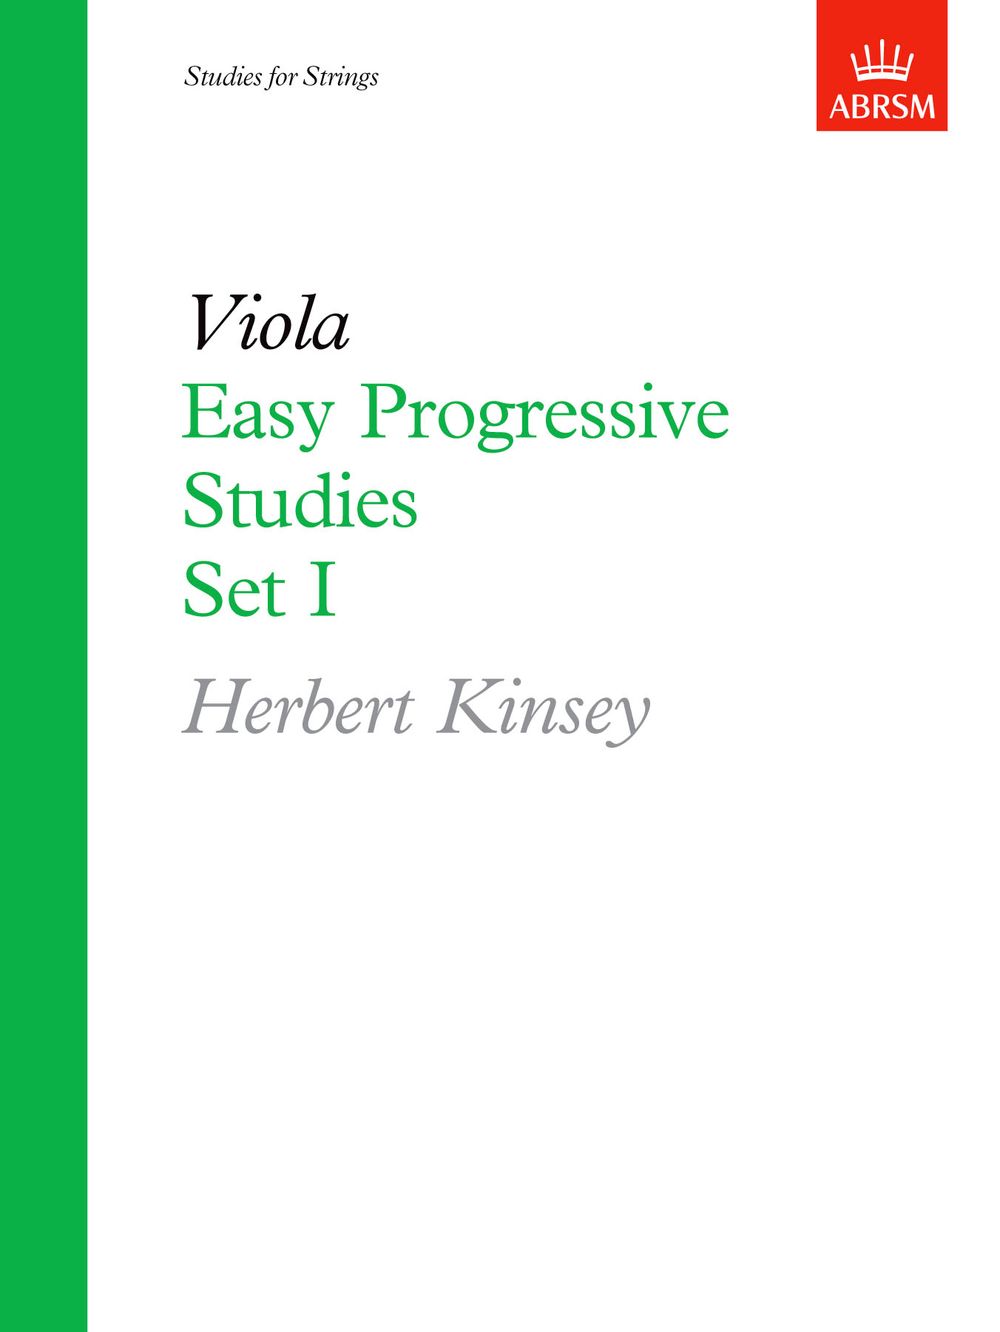 Herbert Kinsey: Easy Progressive Studies  Set I: Violin: Study